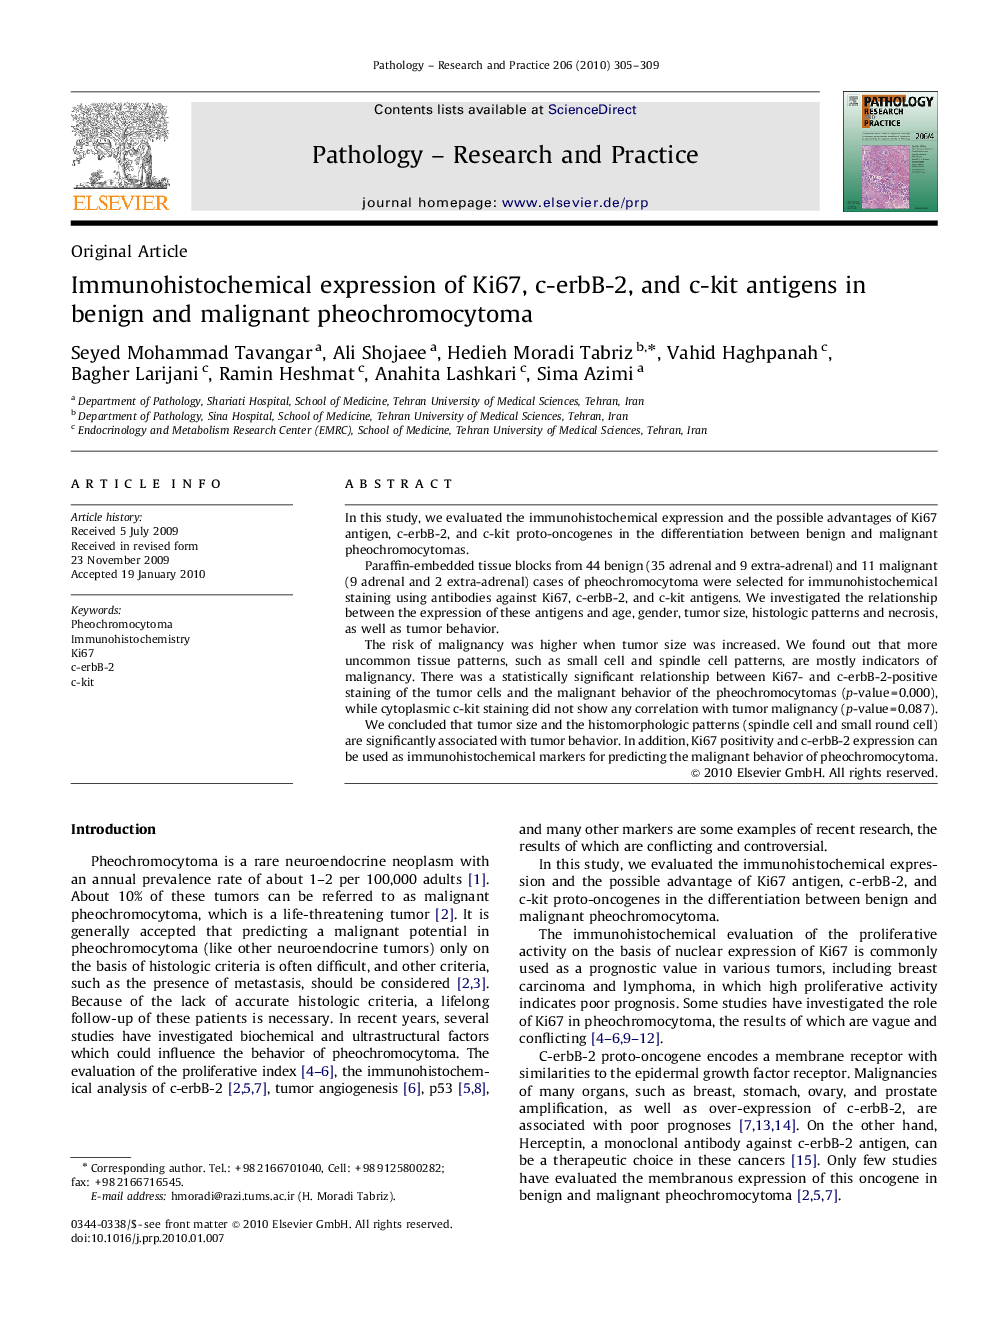 Immunohistochemical expression of Ki67, c-erbB-2, and c-kit antigens in benign and malignant pheochromocytoma